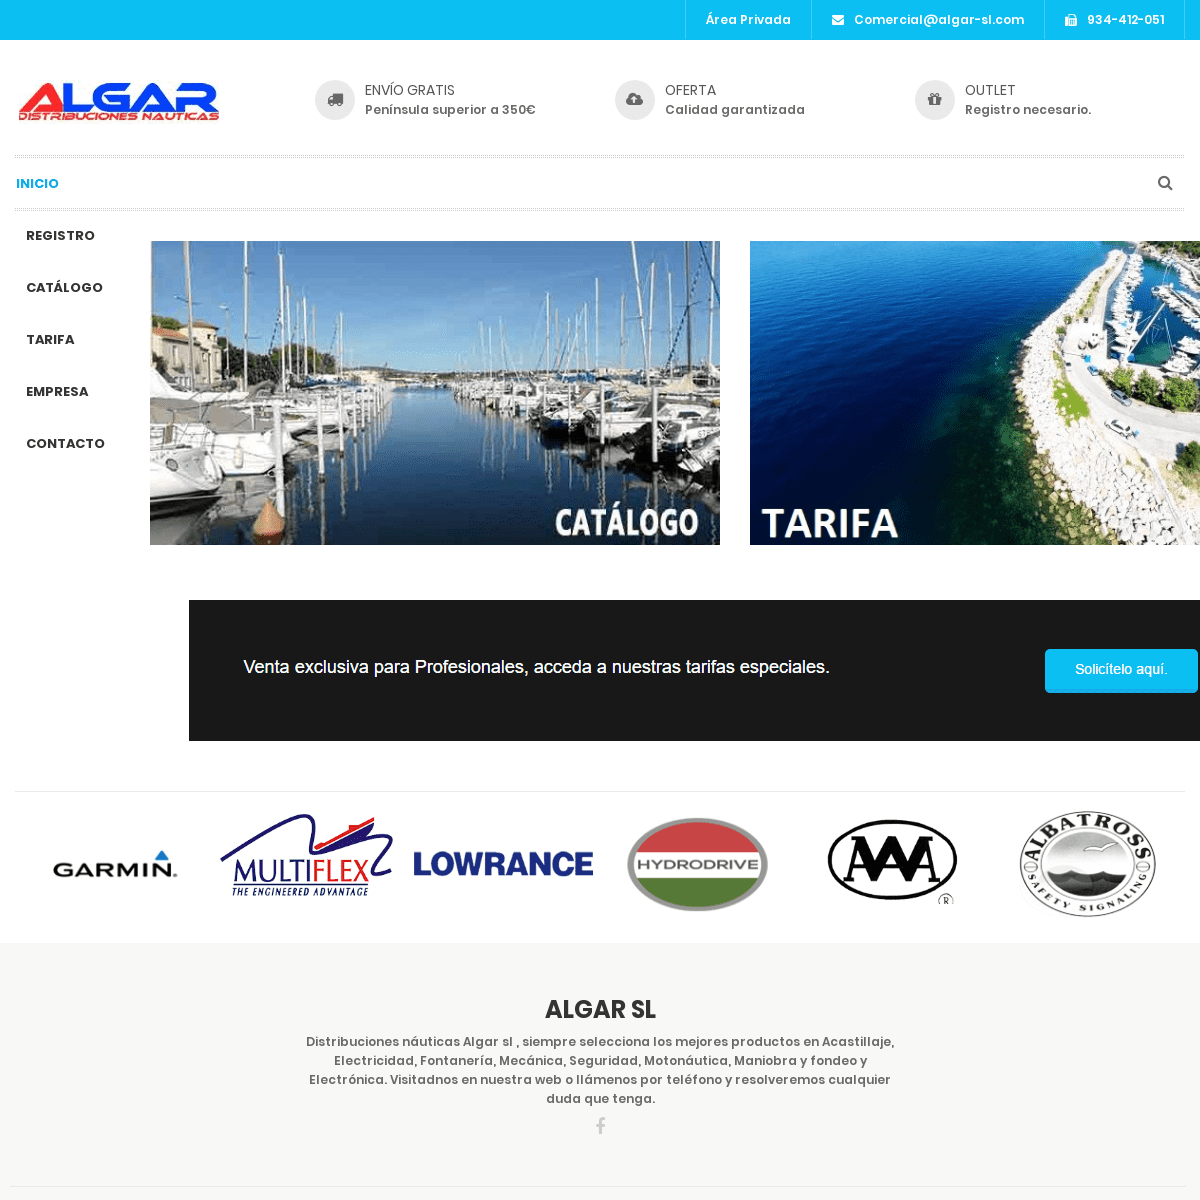 A complete backup of algar-sl.com